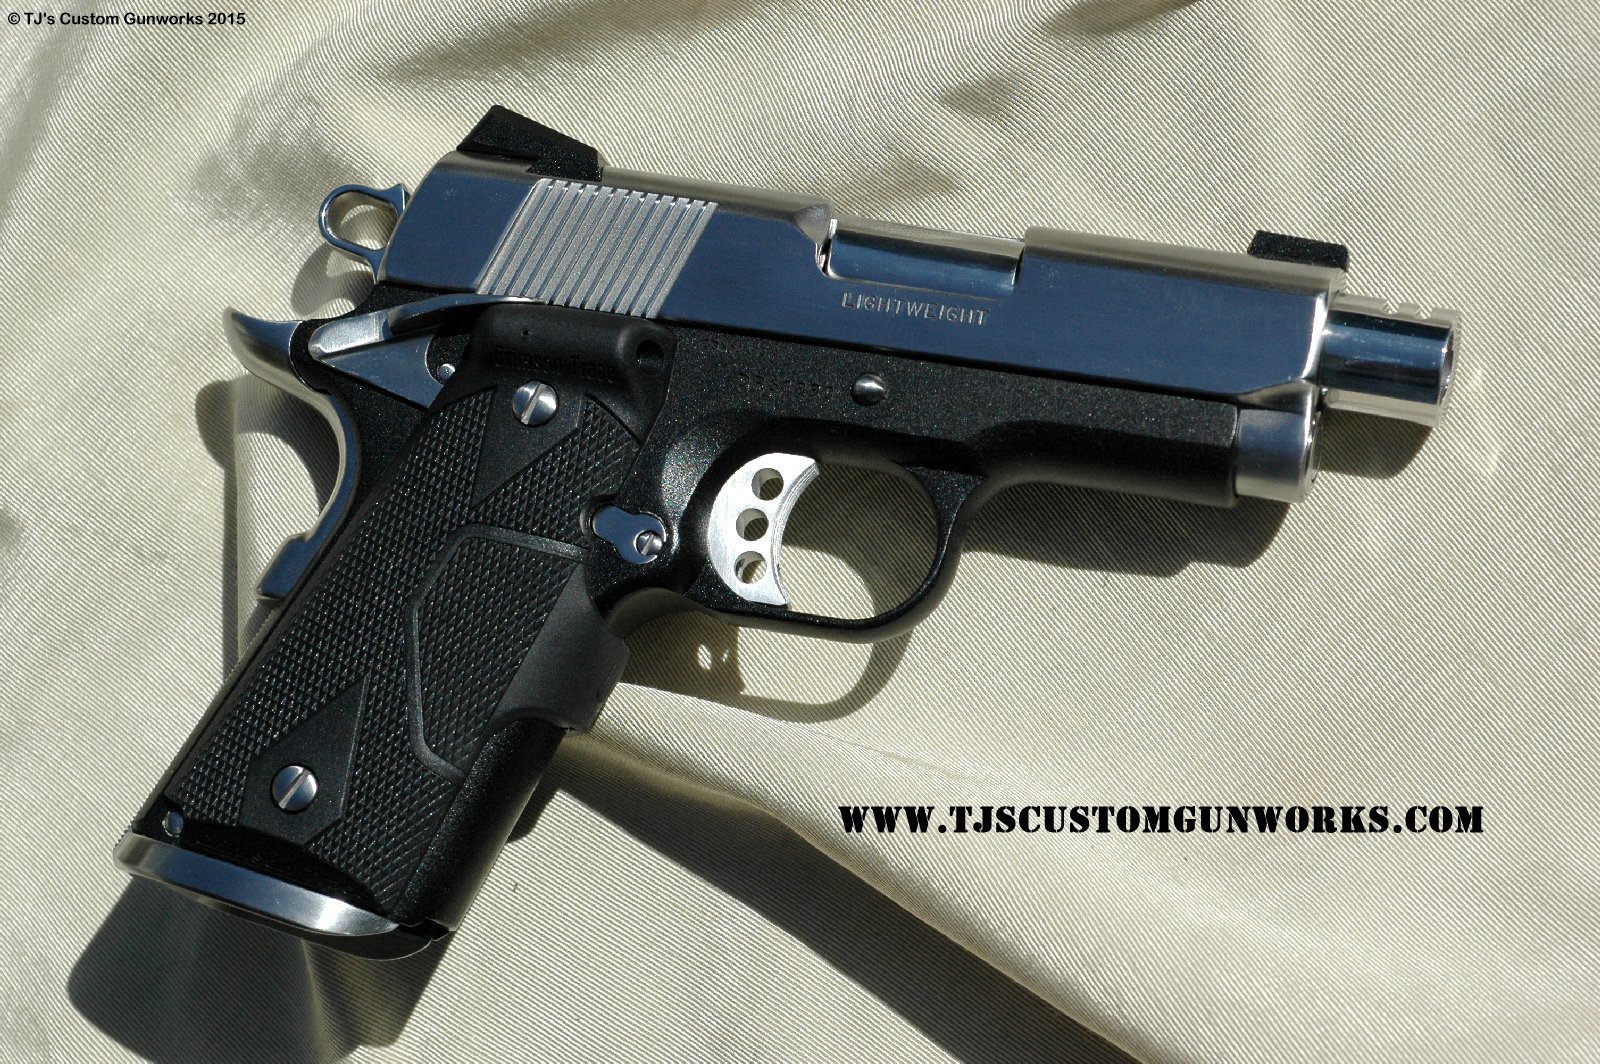 Custom Colt Defender Lightweight Two-Tone .45